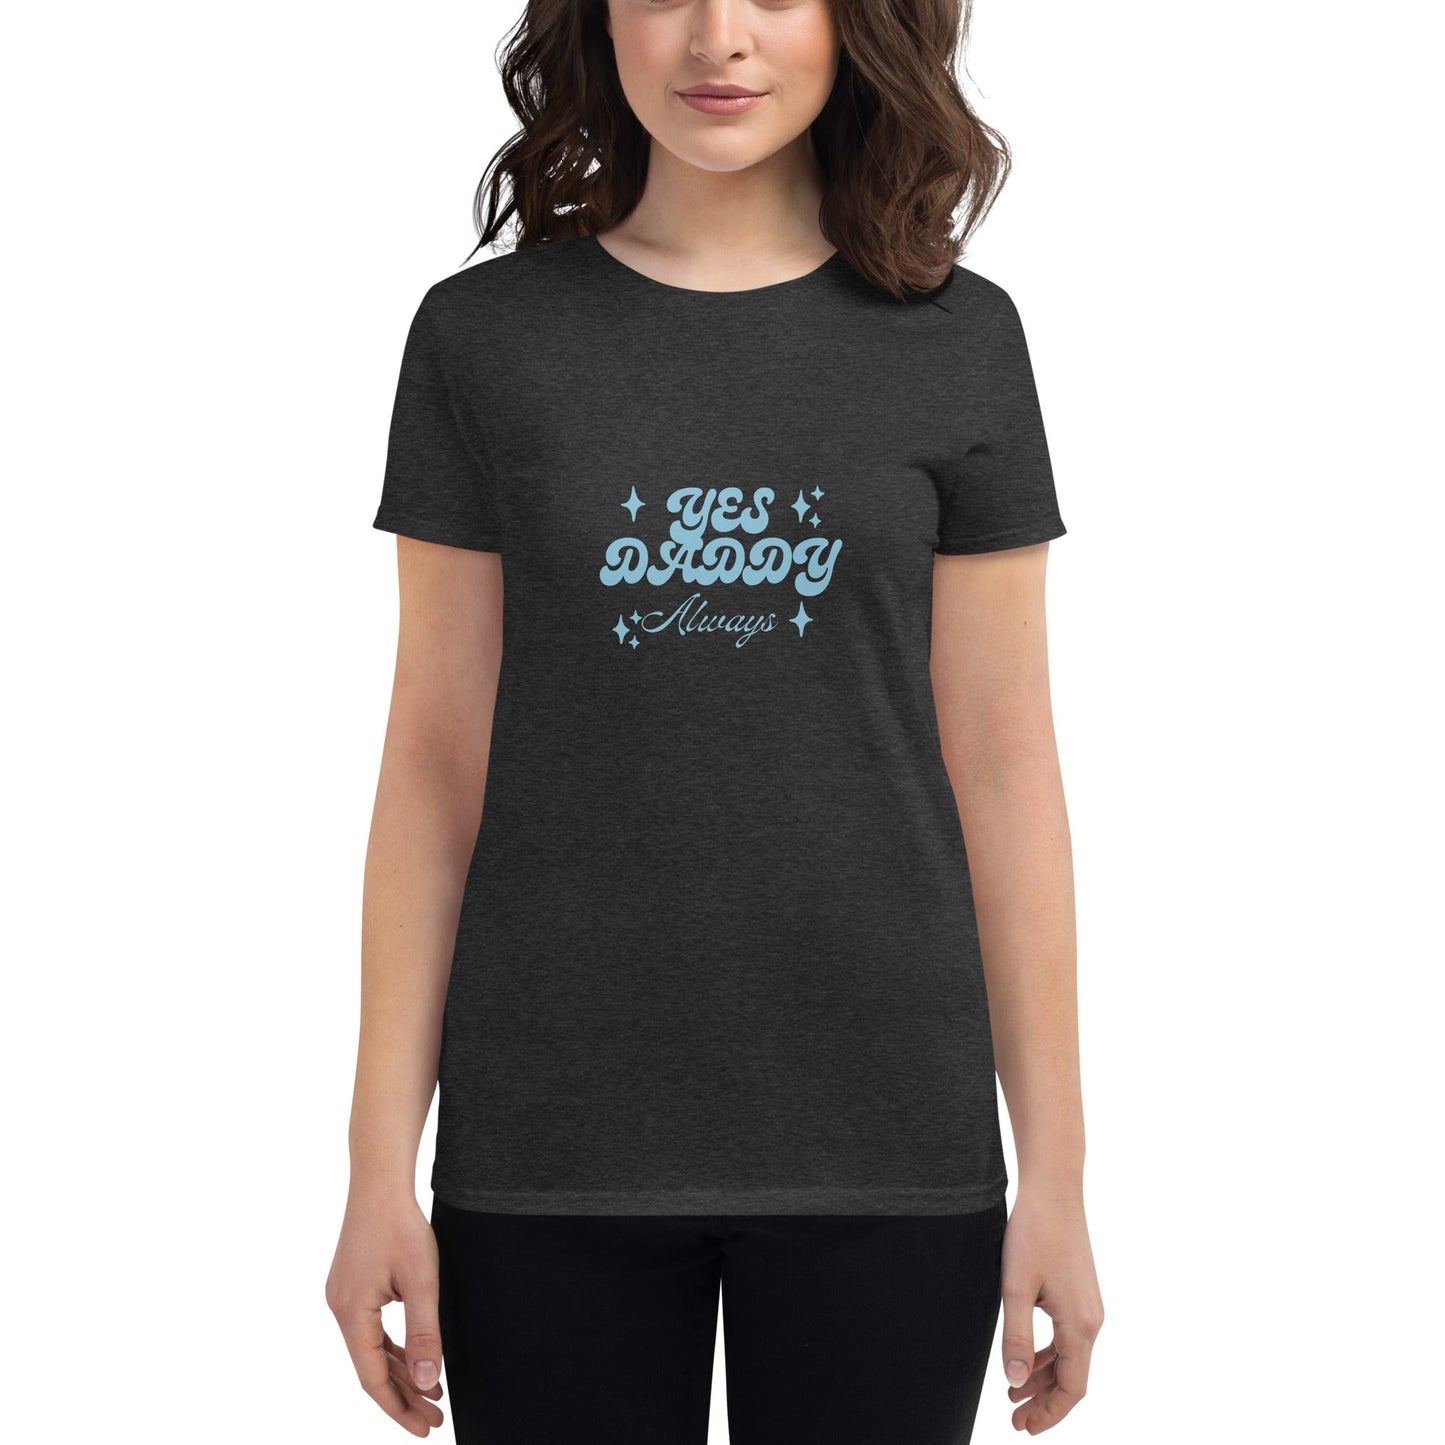 Women's short sleeve t-shirt - My Store